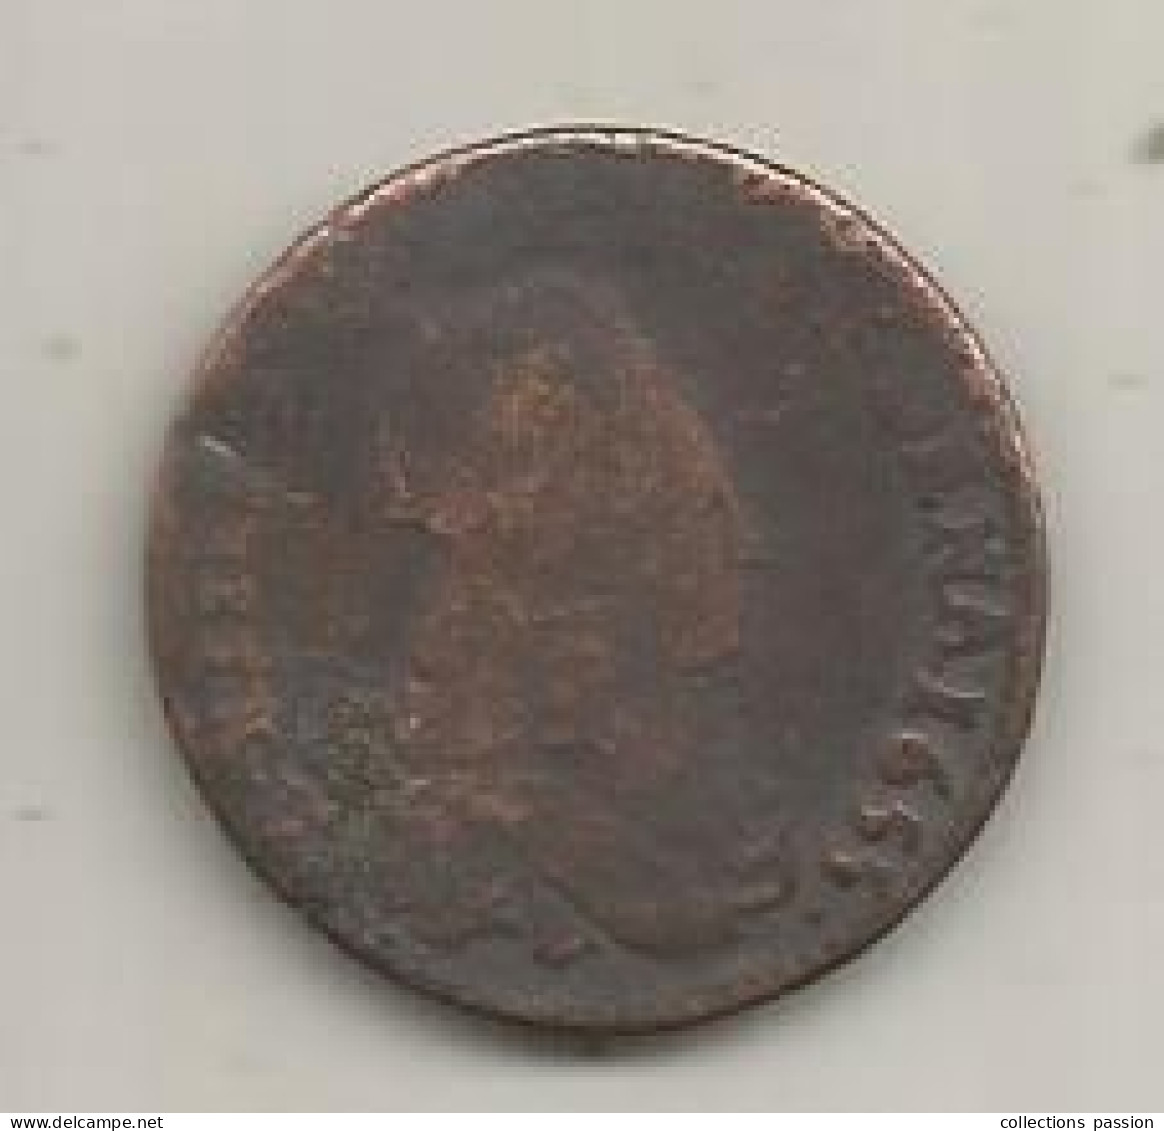 Monnaie, LIARD, Louis XIIII, 1655, 2 Scans - 1643-1715 Luis XIV El Rey Sol